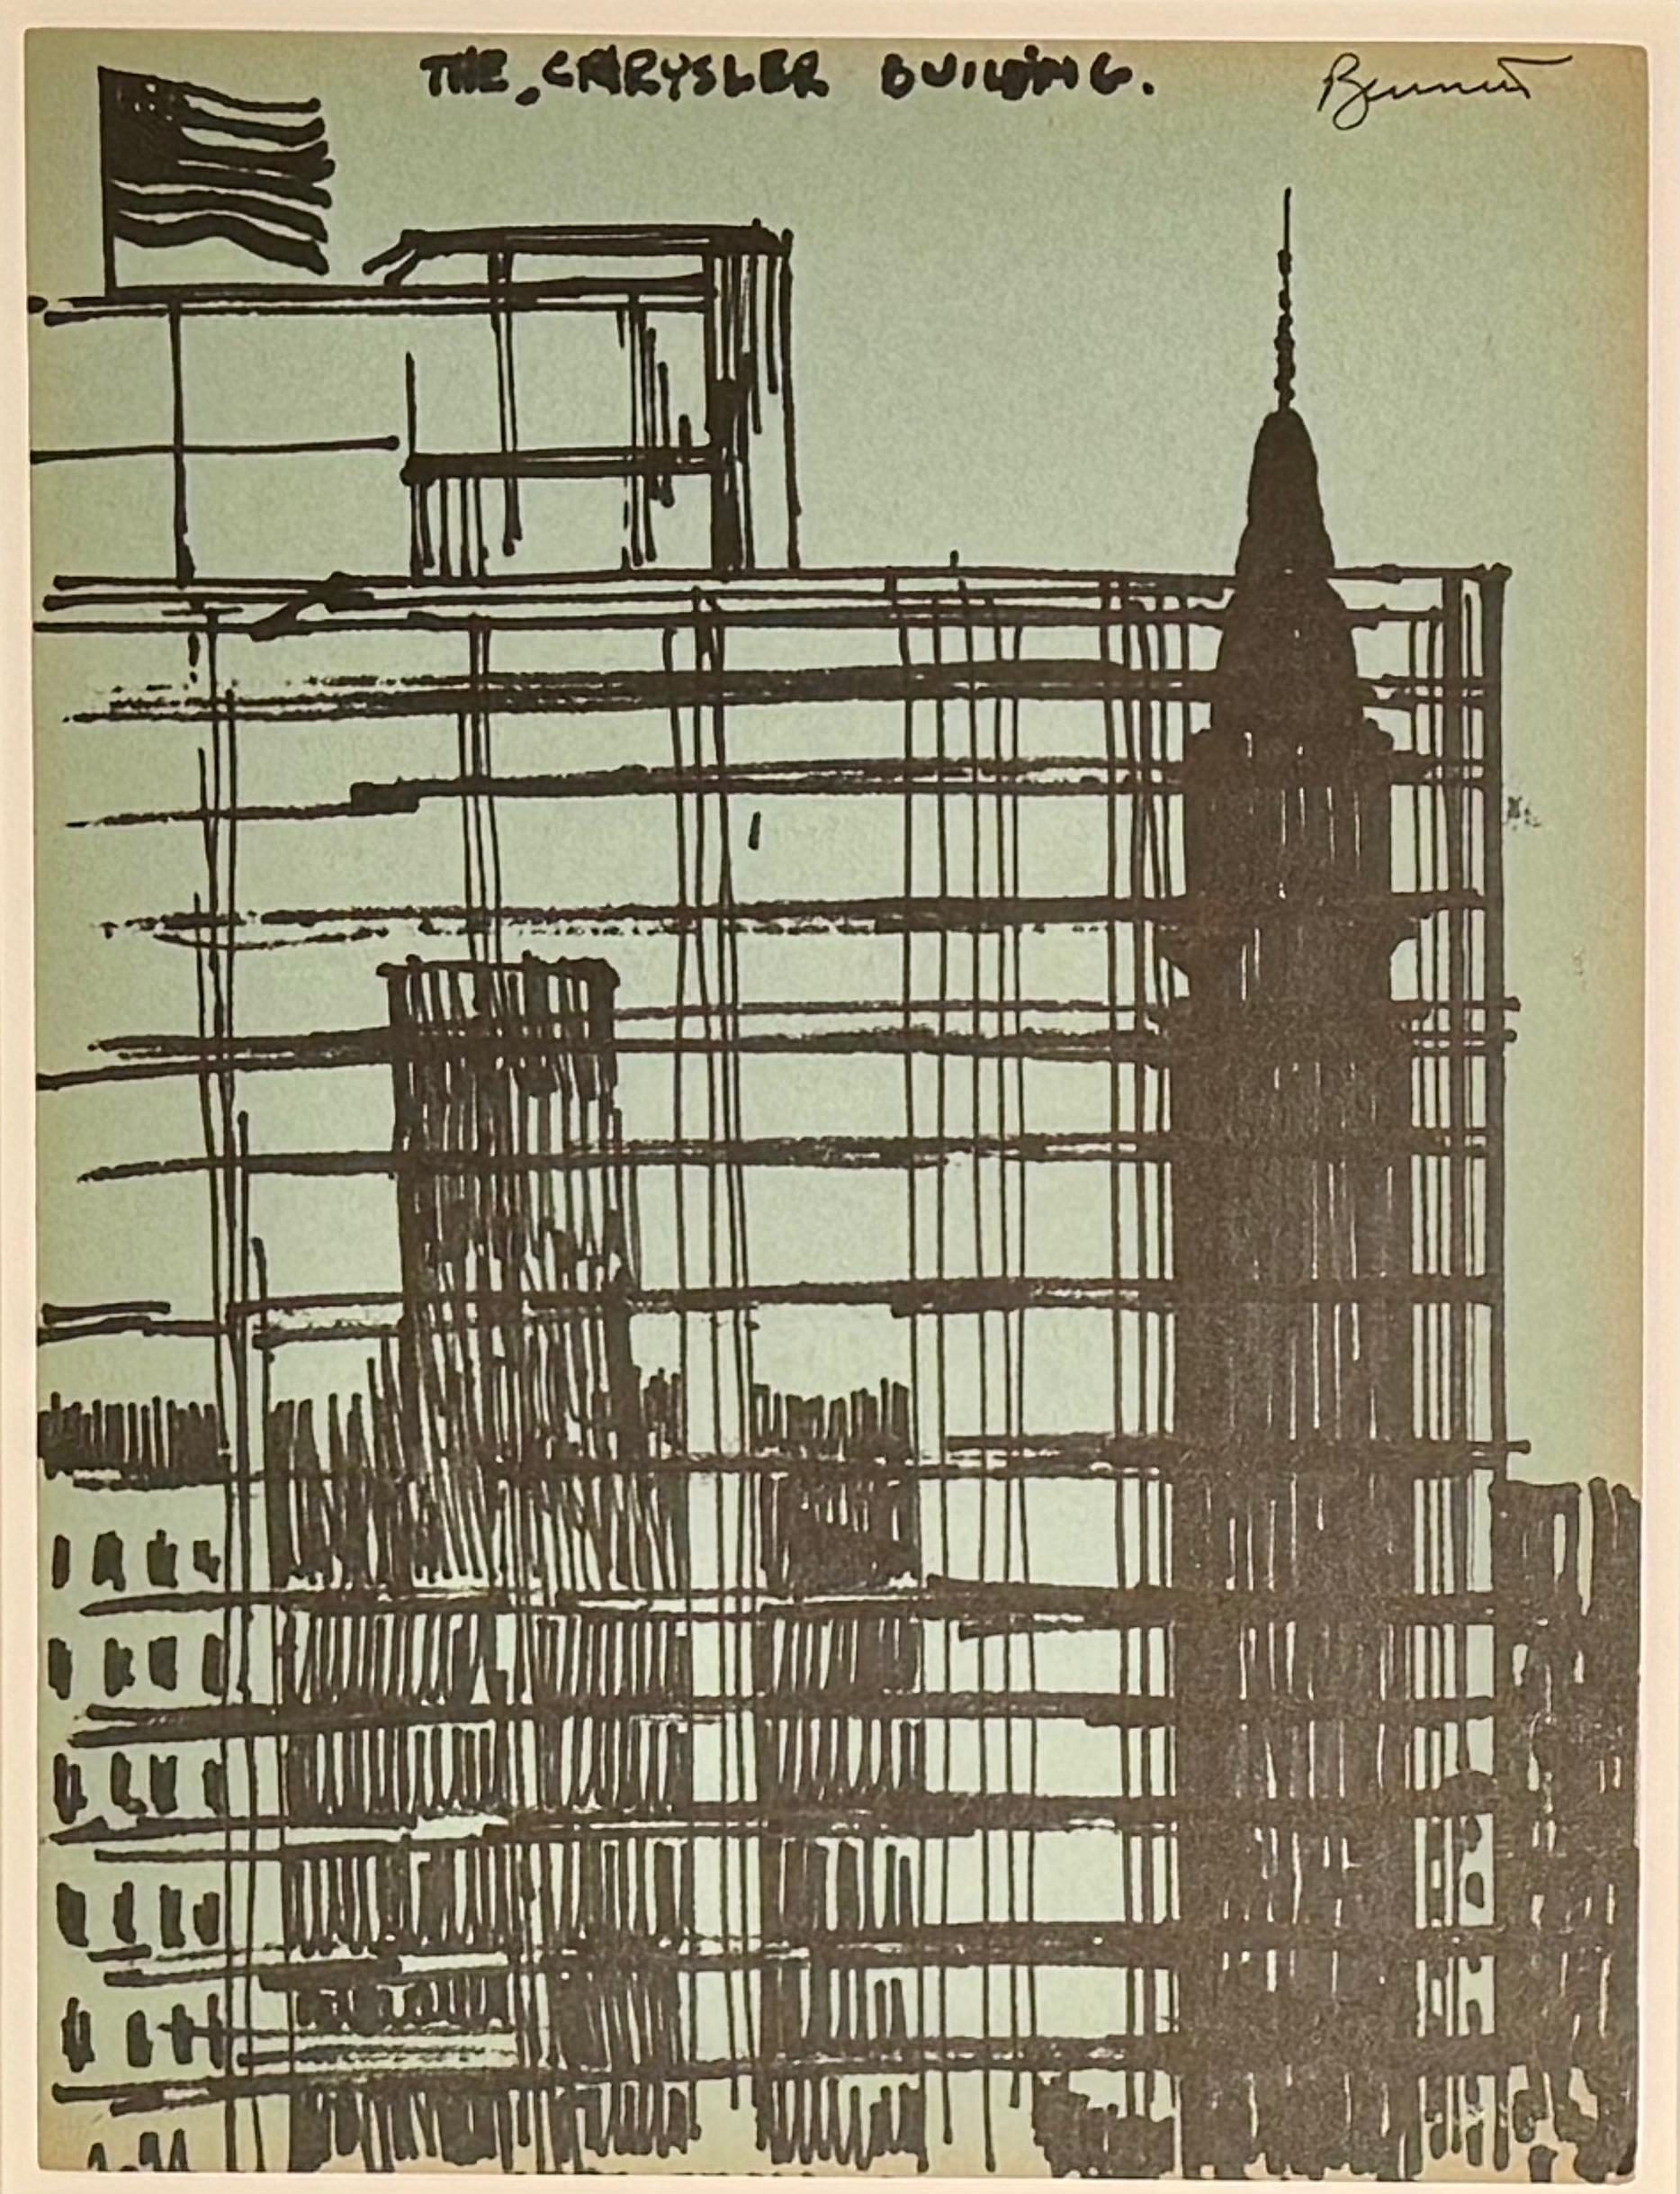 Legendary Tony Bennett Original NYC "Chrysler Building" Contemporary Drawing